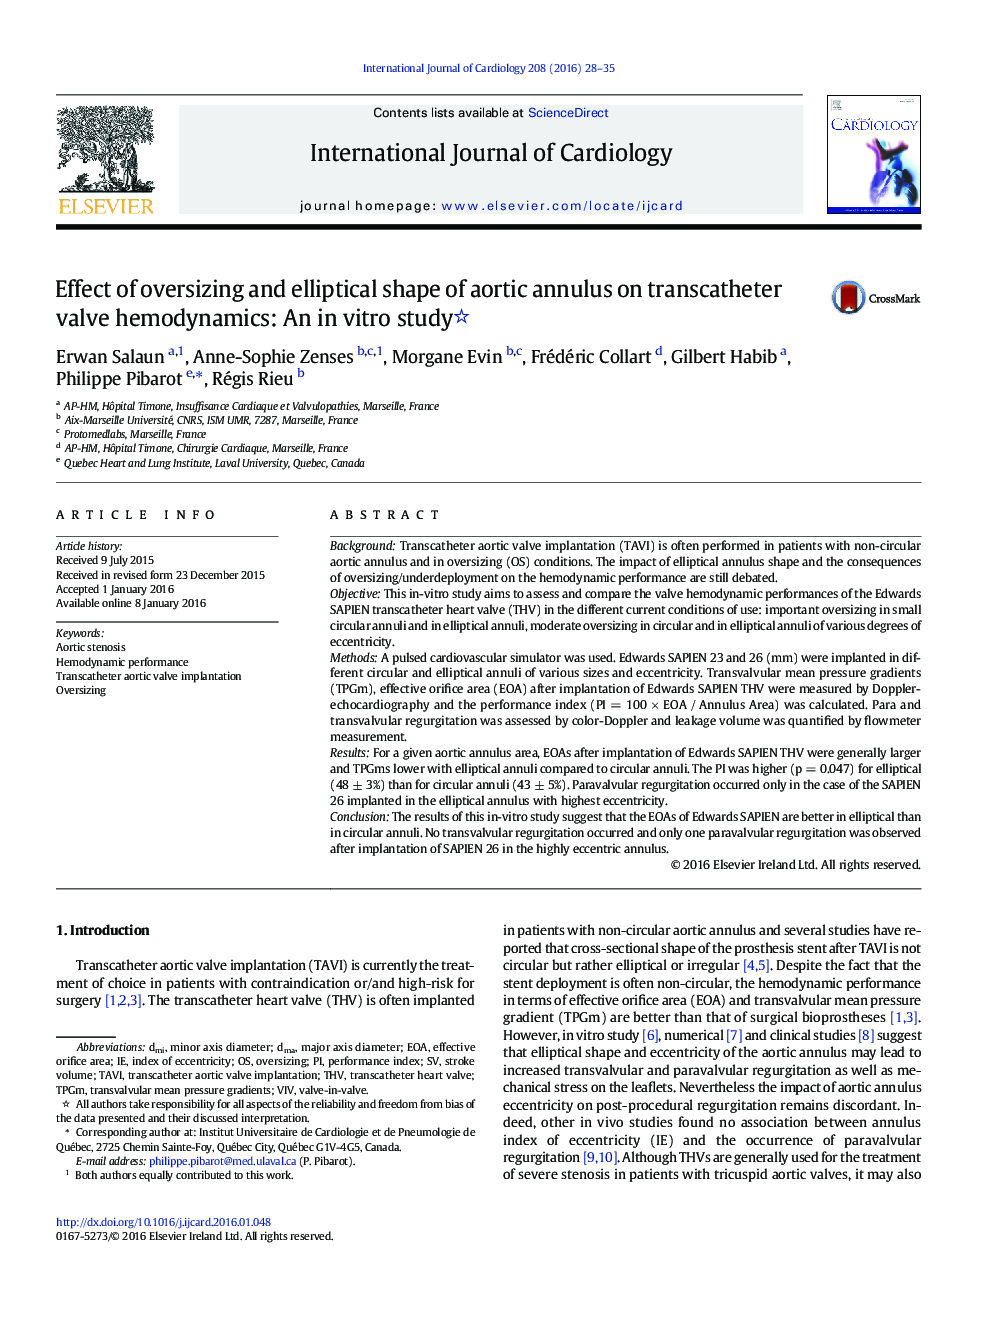 Effect of oversizing and elliptical shape of aortic annulus on transcatheter valve hemodynamics: An in vitro study 